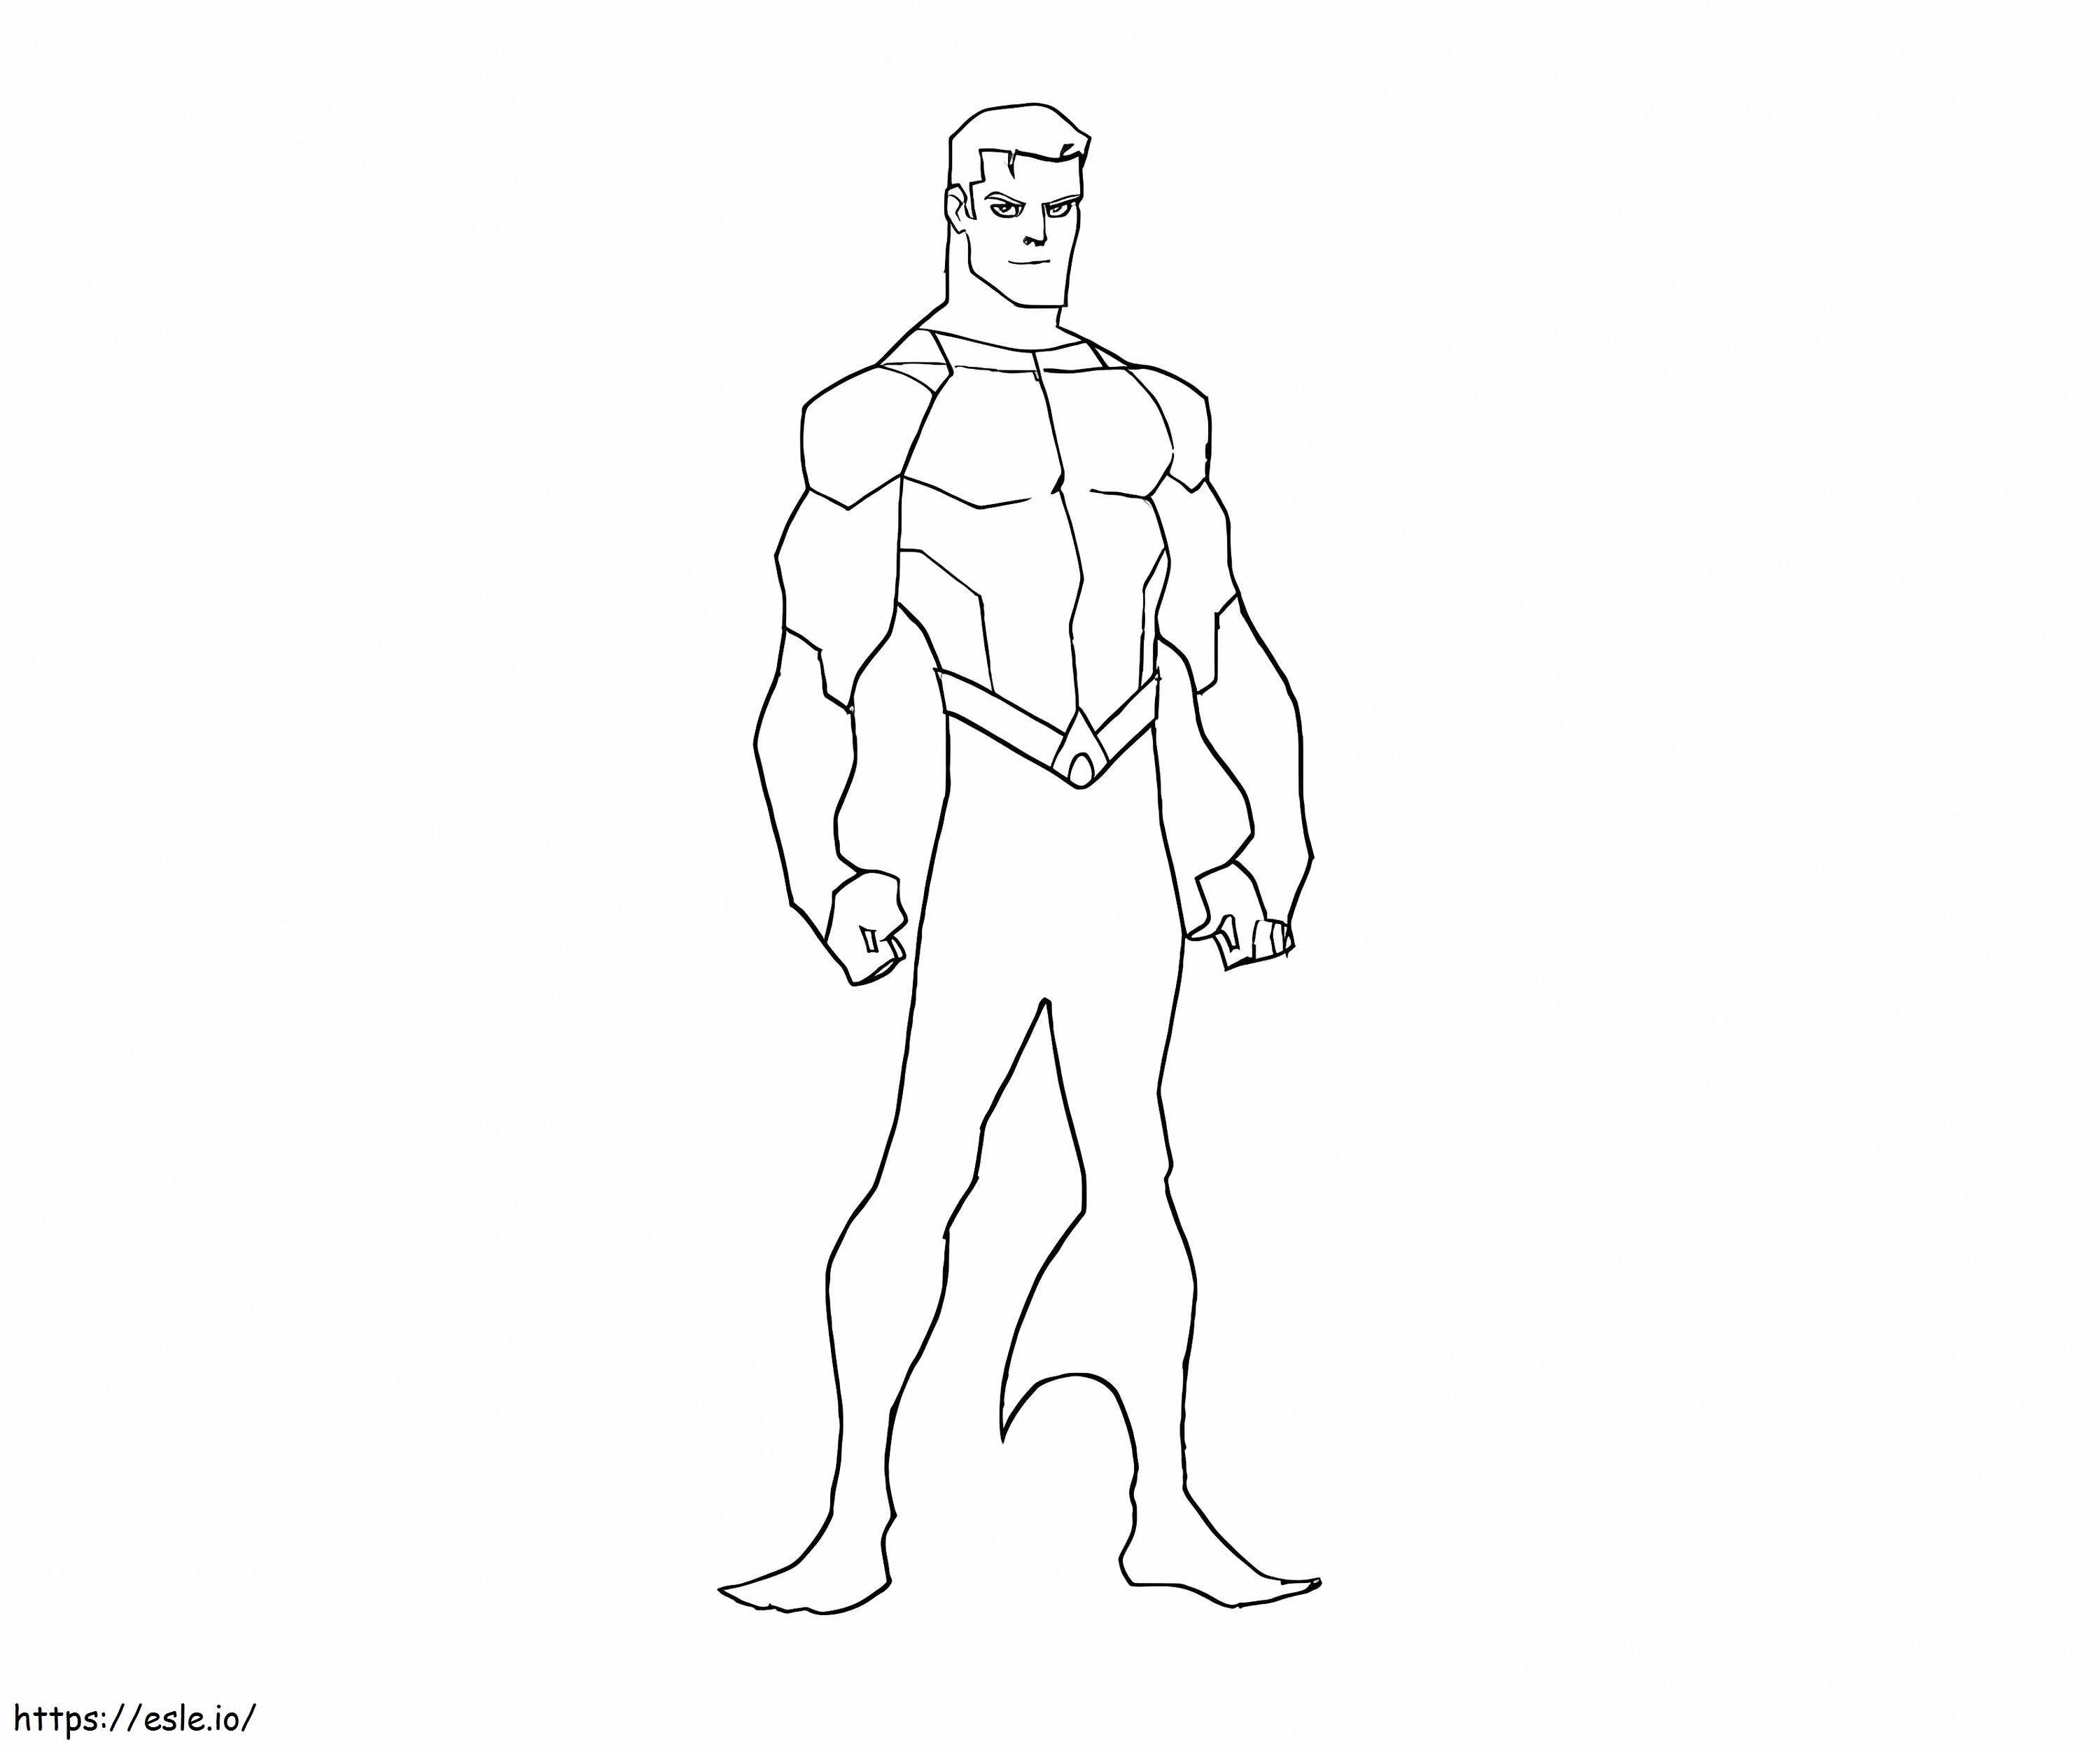 Gran Aquaman coloring page